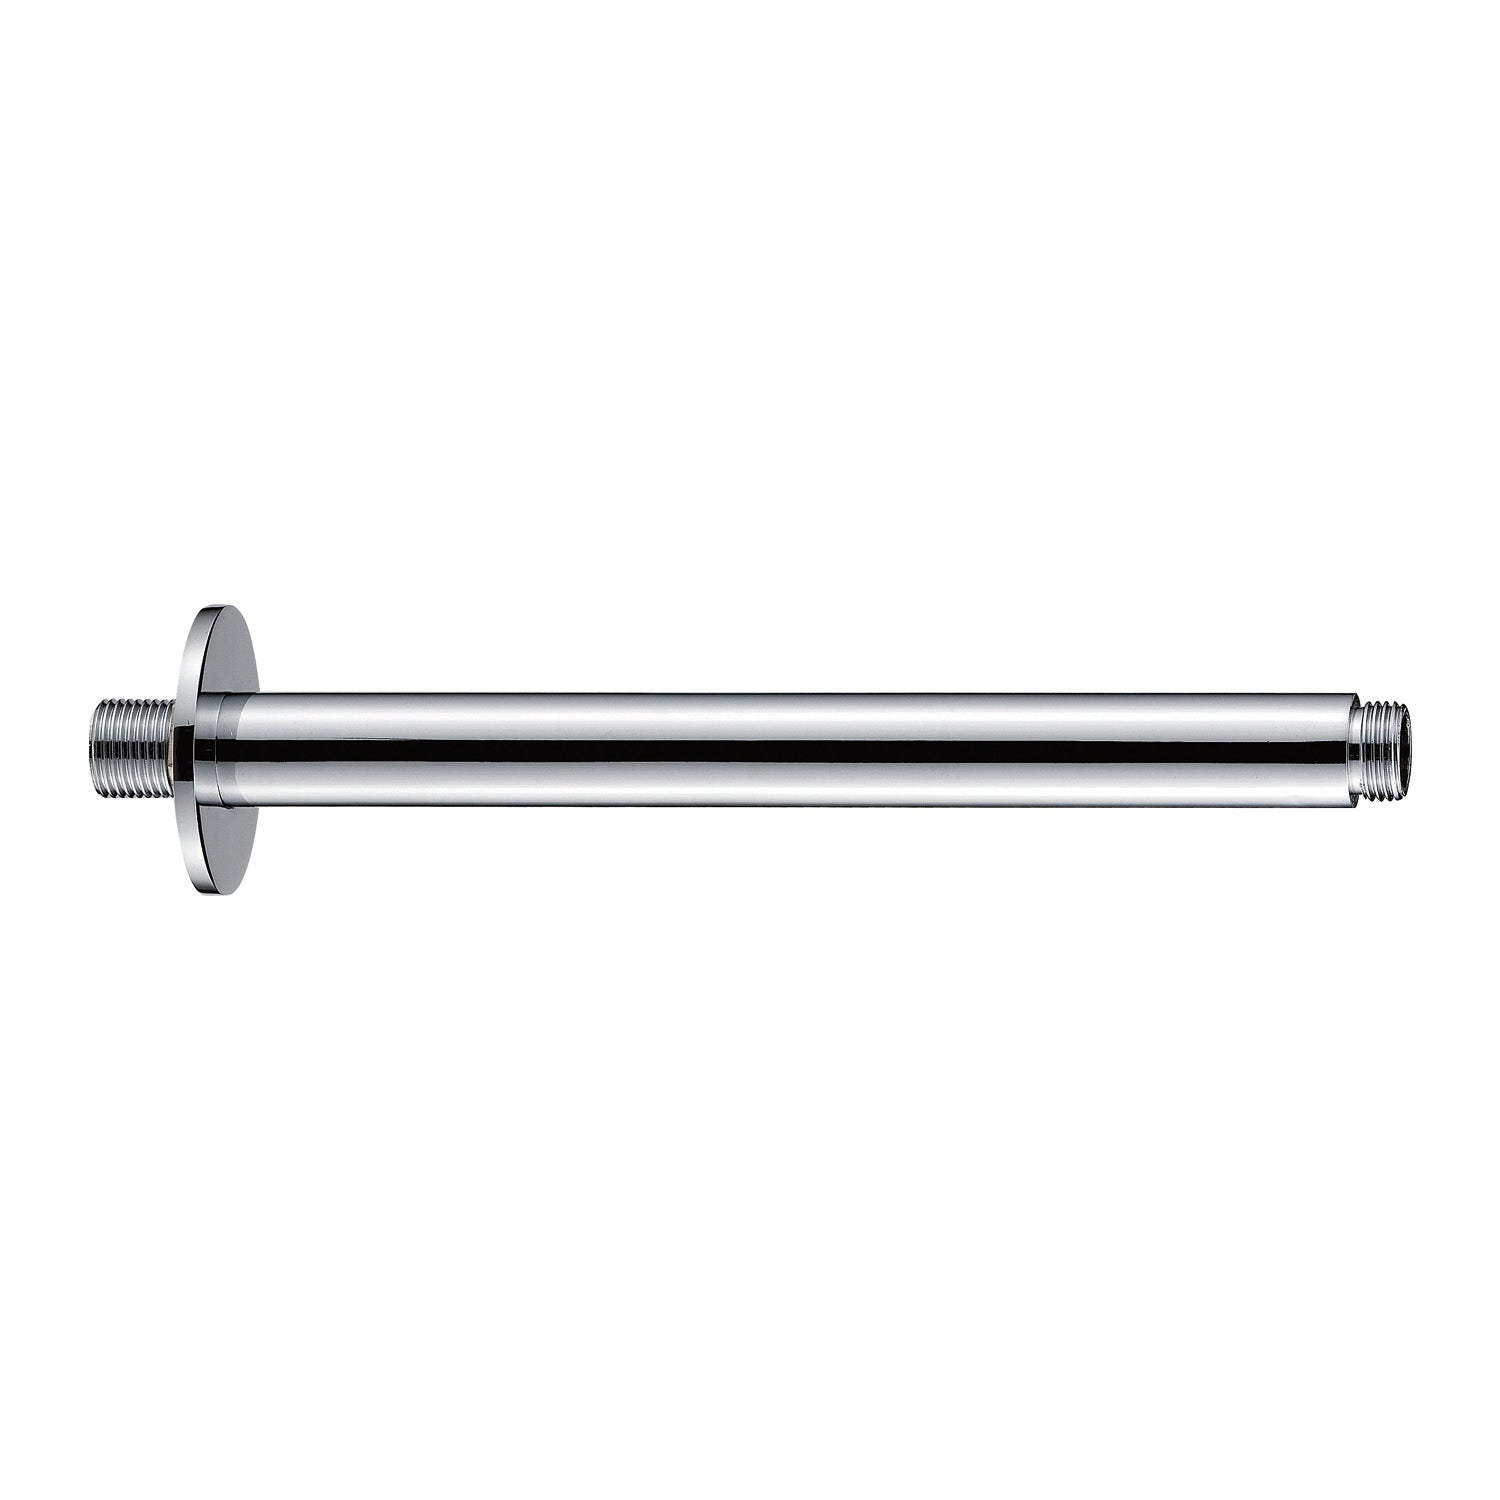 Dax Brass Round Ceiling Shower Arm 8 Inches Brushed Nickel Finish (DAX-1016-200-BN)